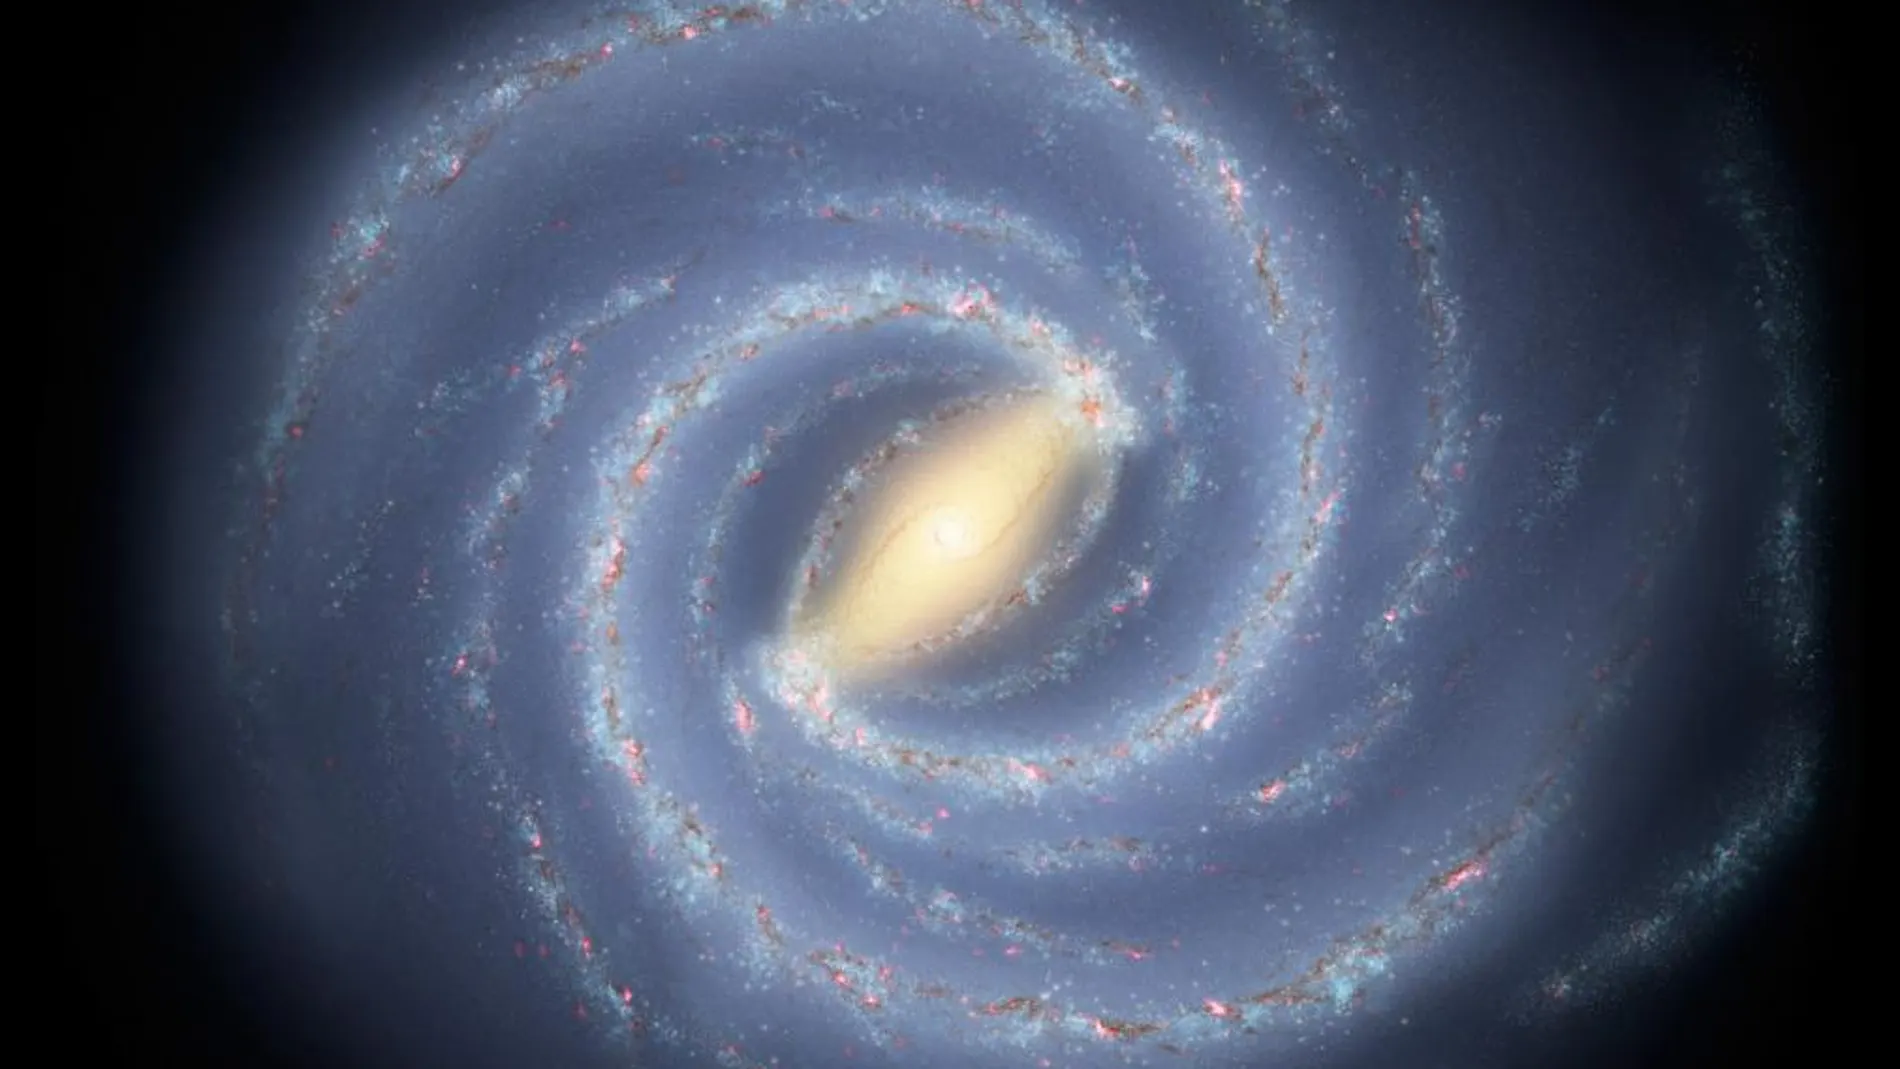 Imagen de la Vía Láctea